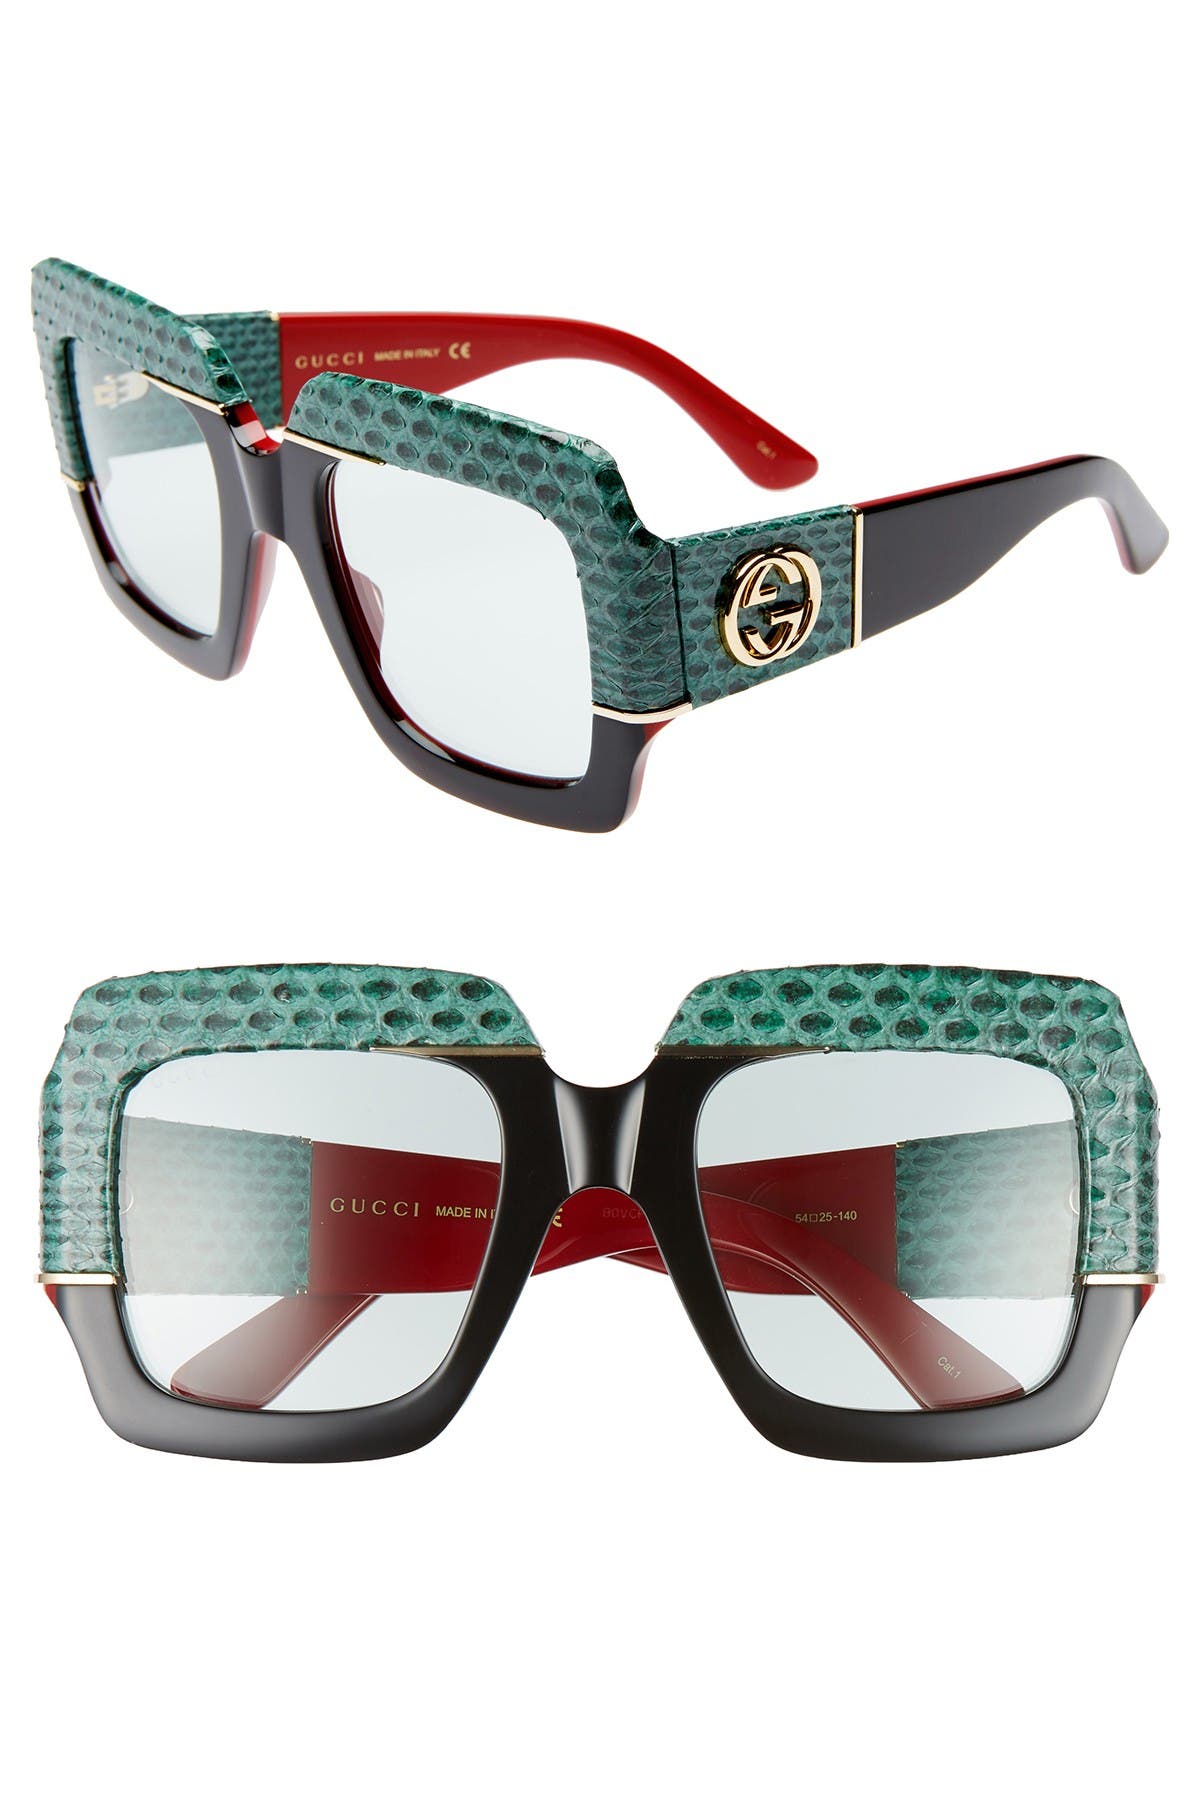 gucci snakeskin glasses